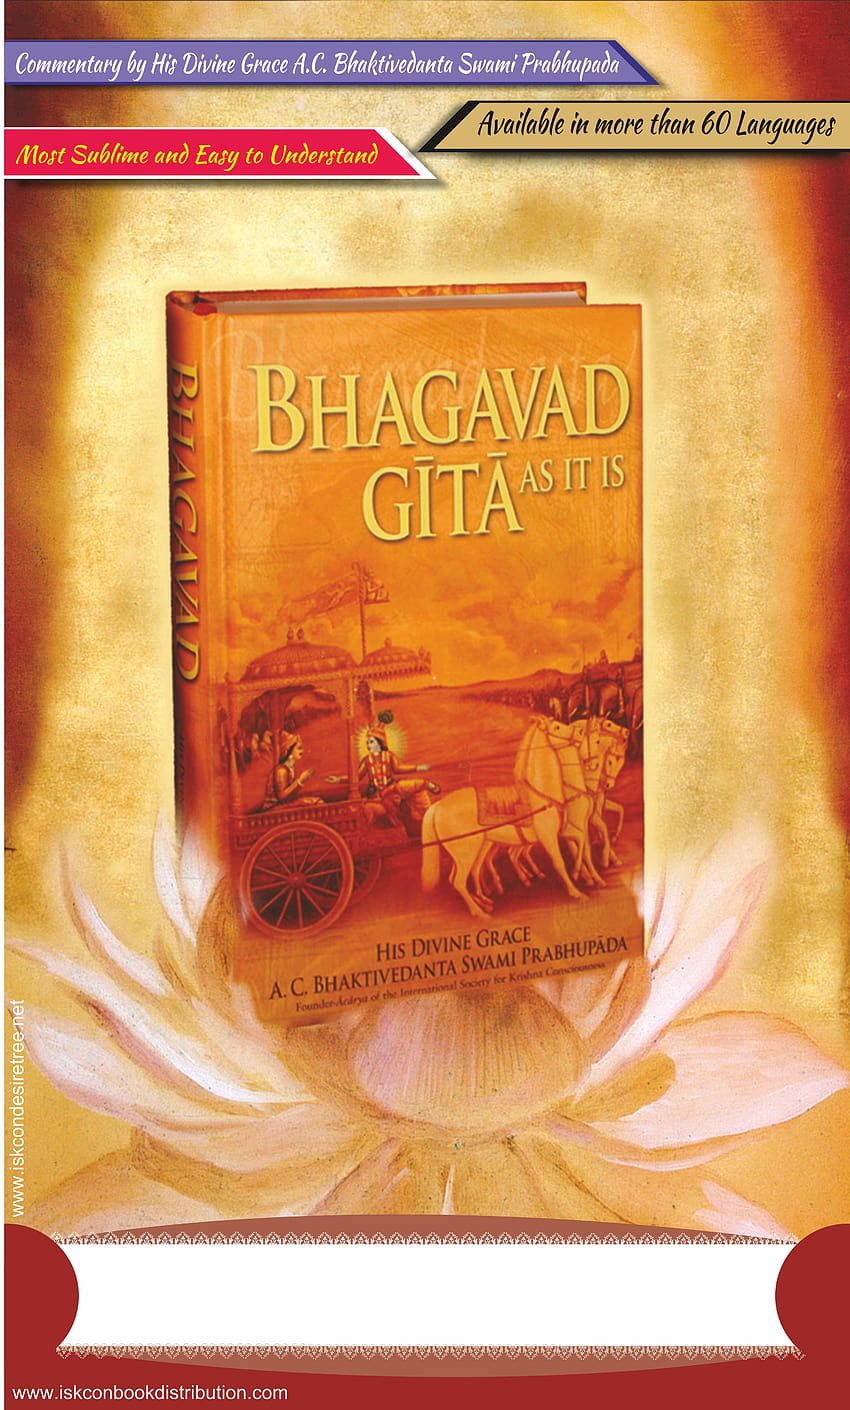 Book Distribution Bhagavad Gita Banner HD phone wallpaper